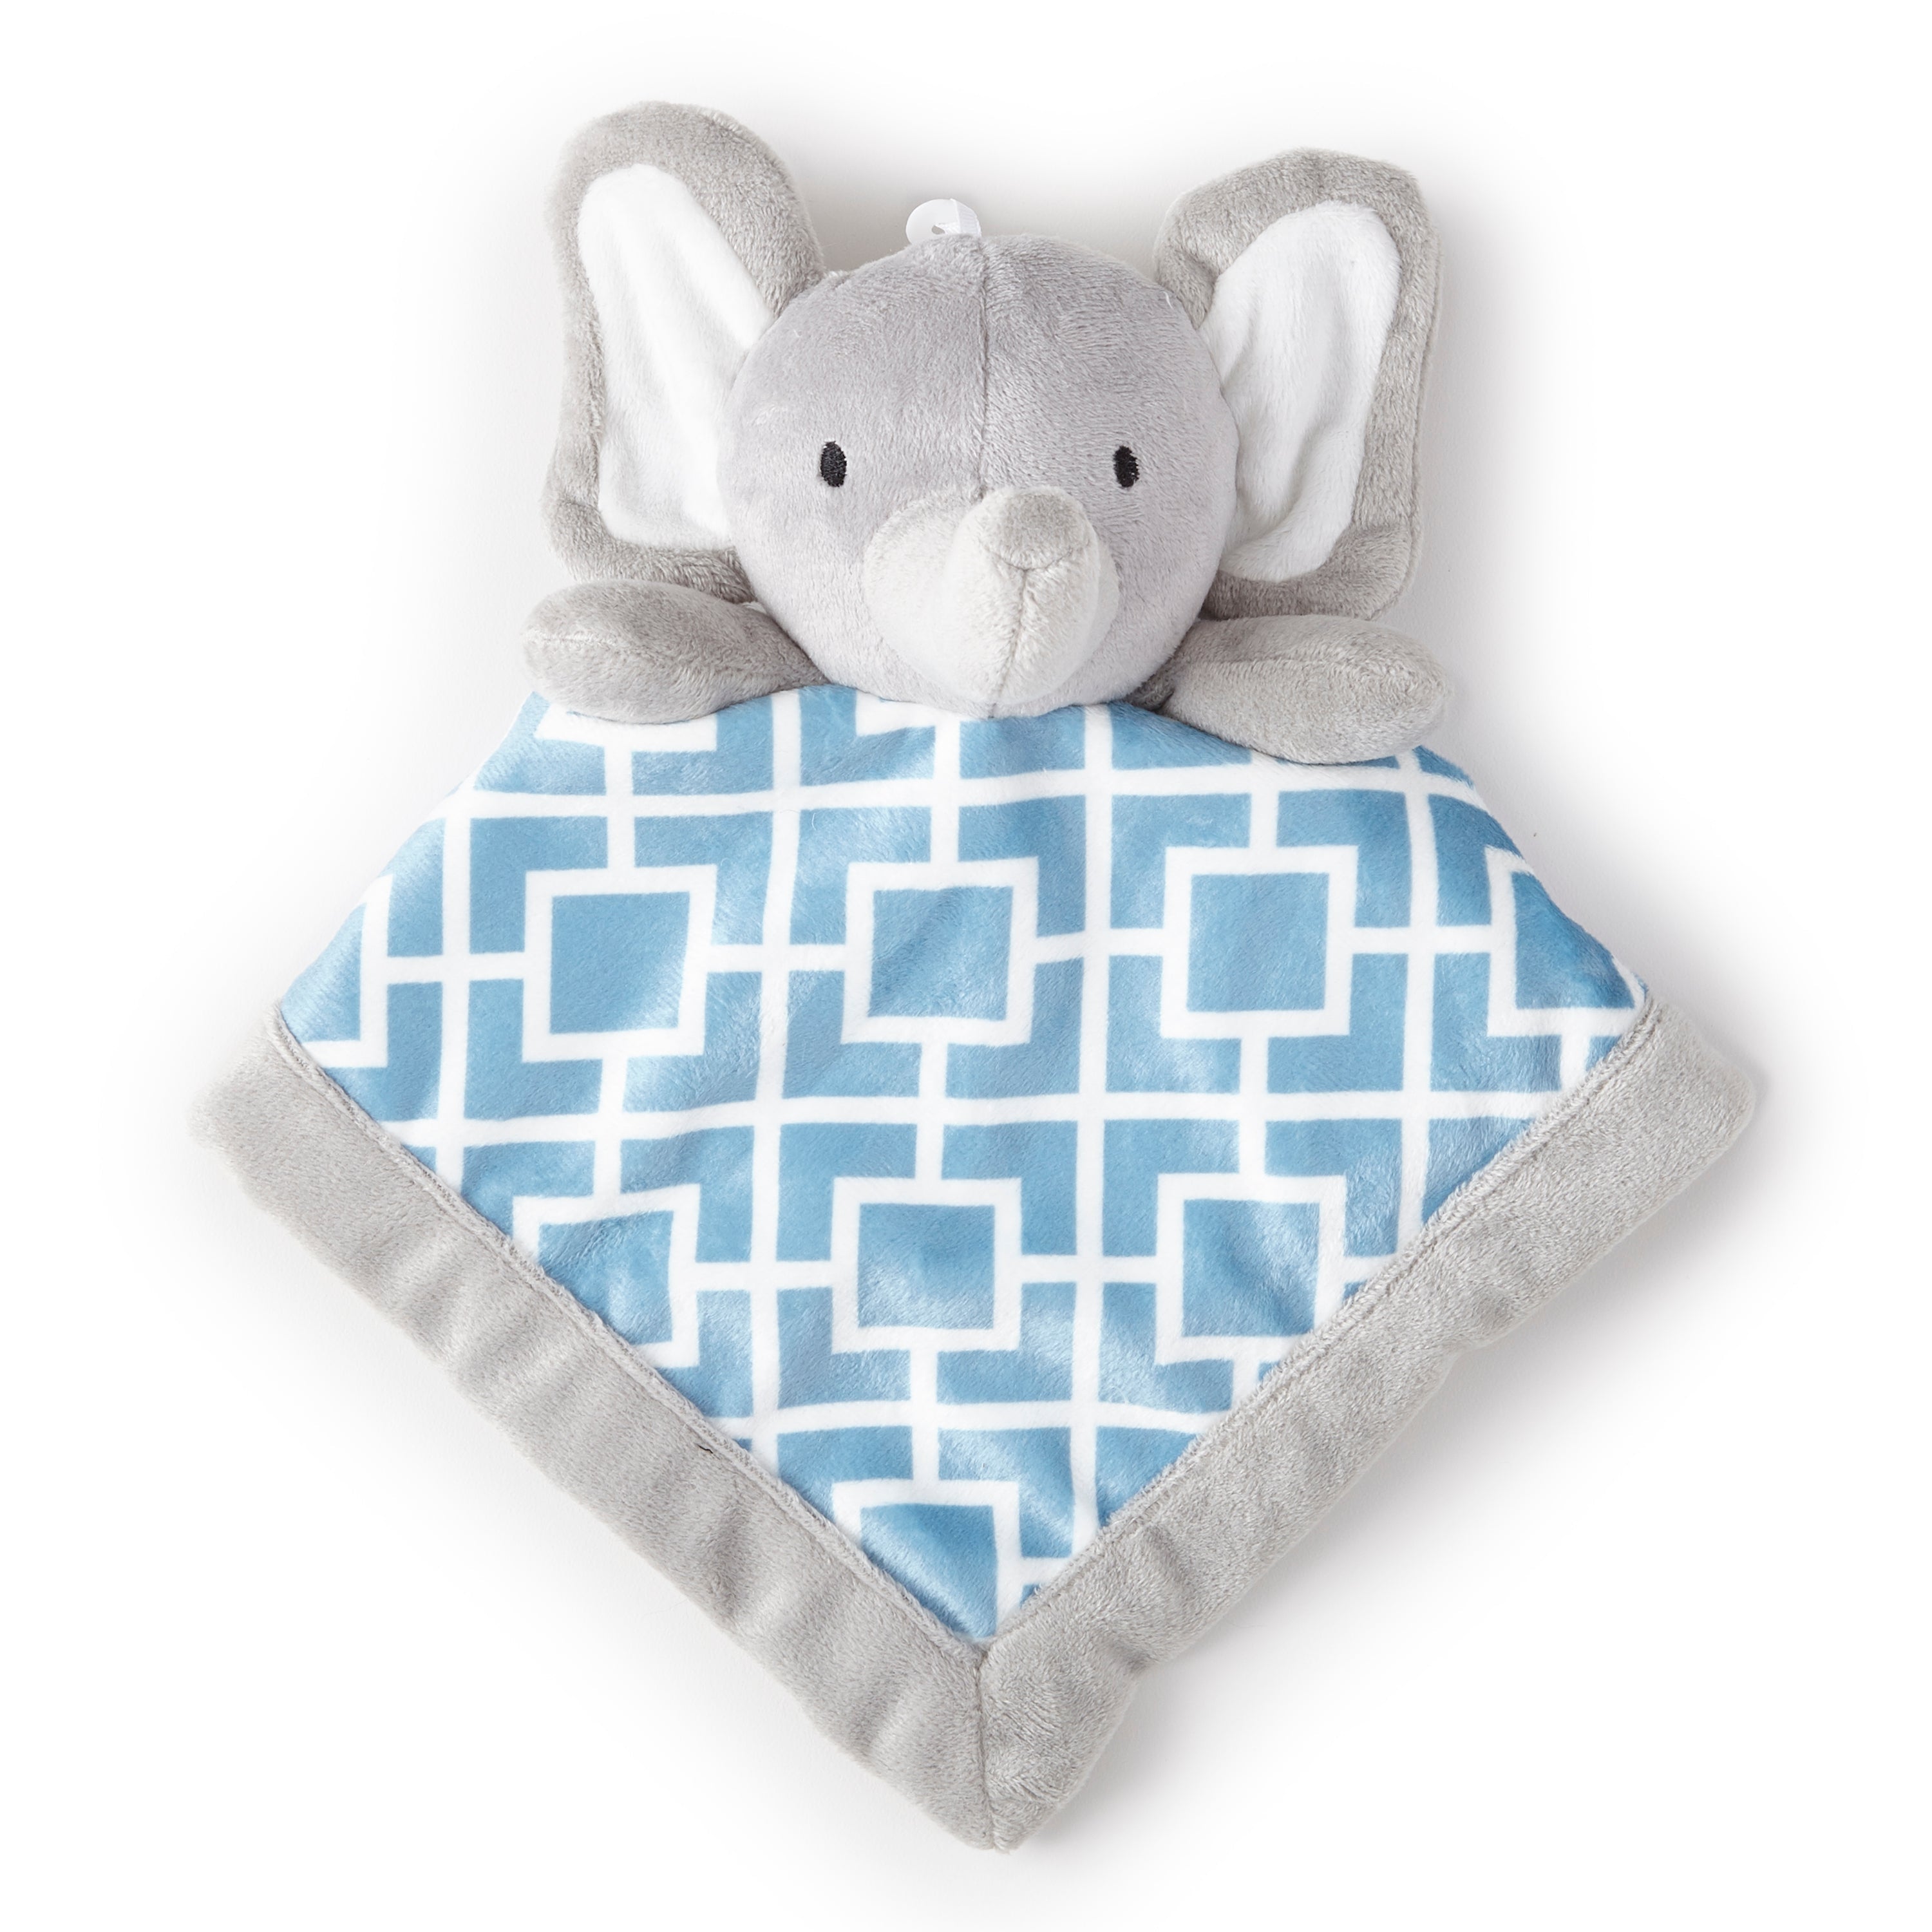 Elephant Plush Security Blanket - Grey